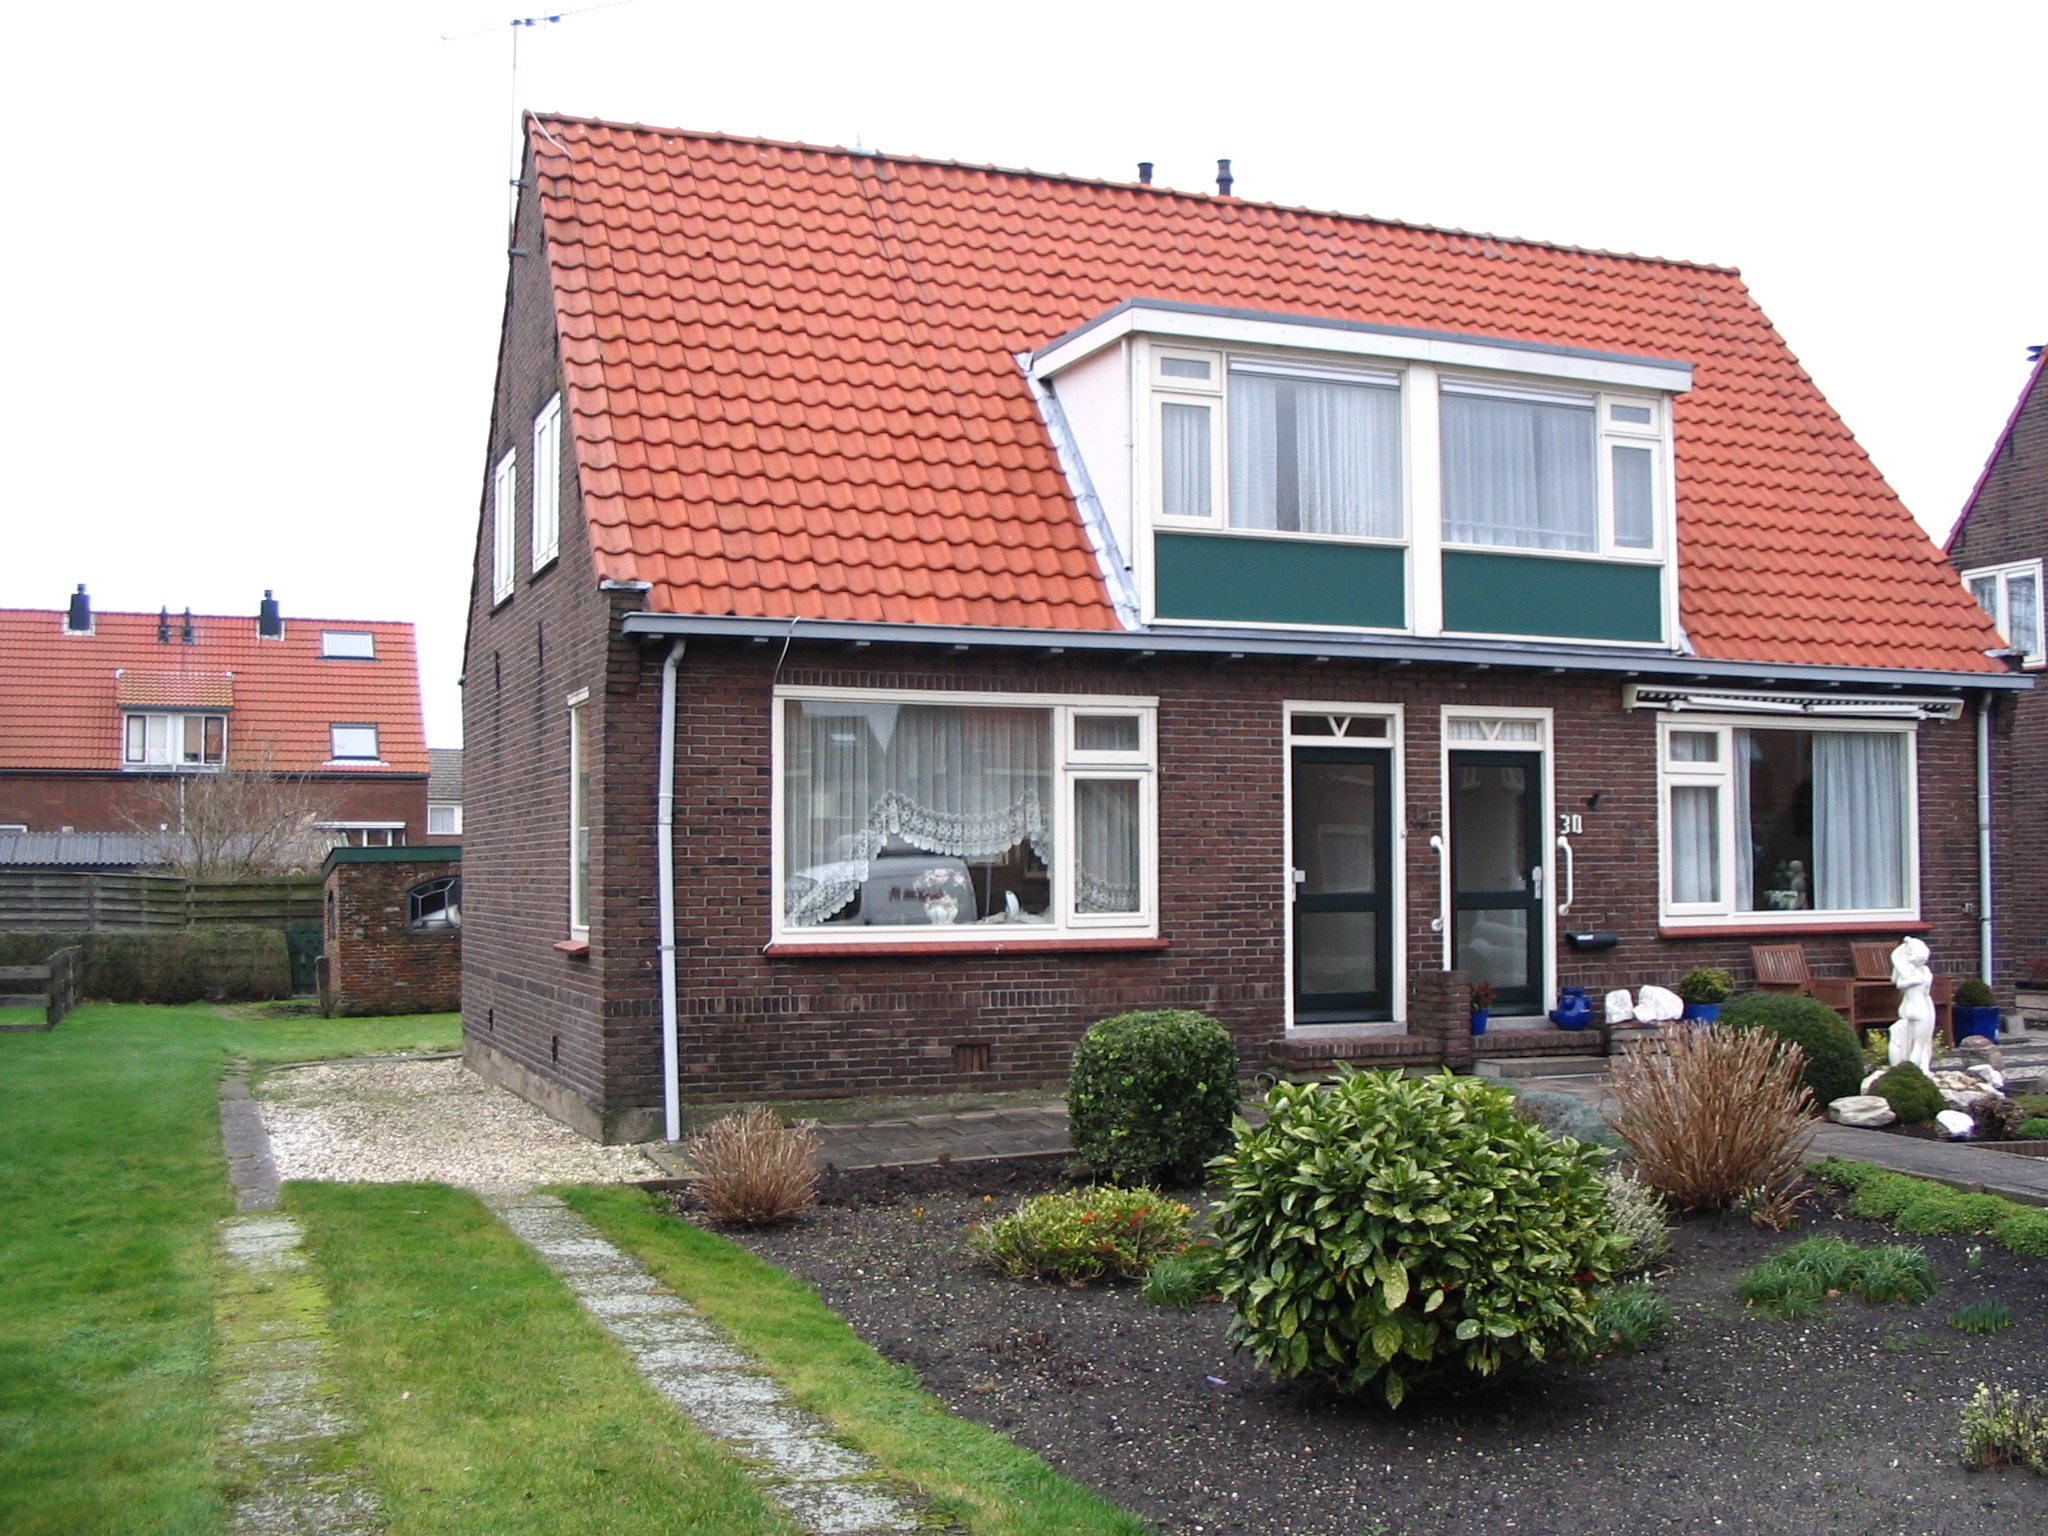 Oud Adeselaan 30, 2375 XE Rijpwetering, Nederland